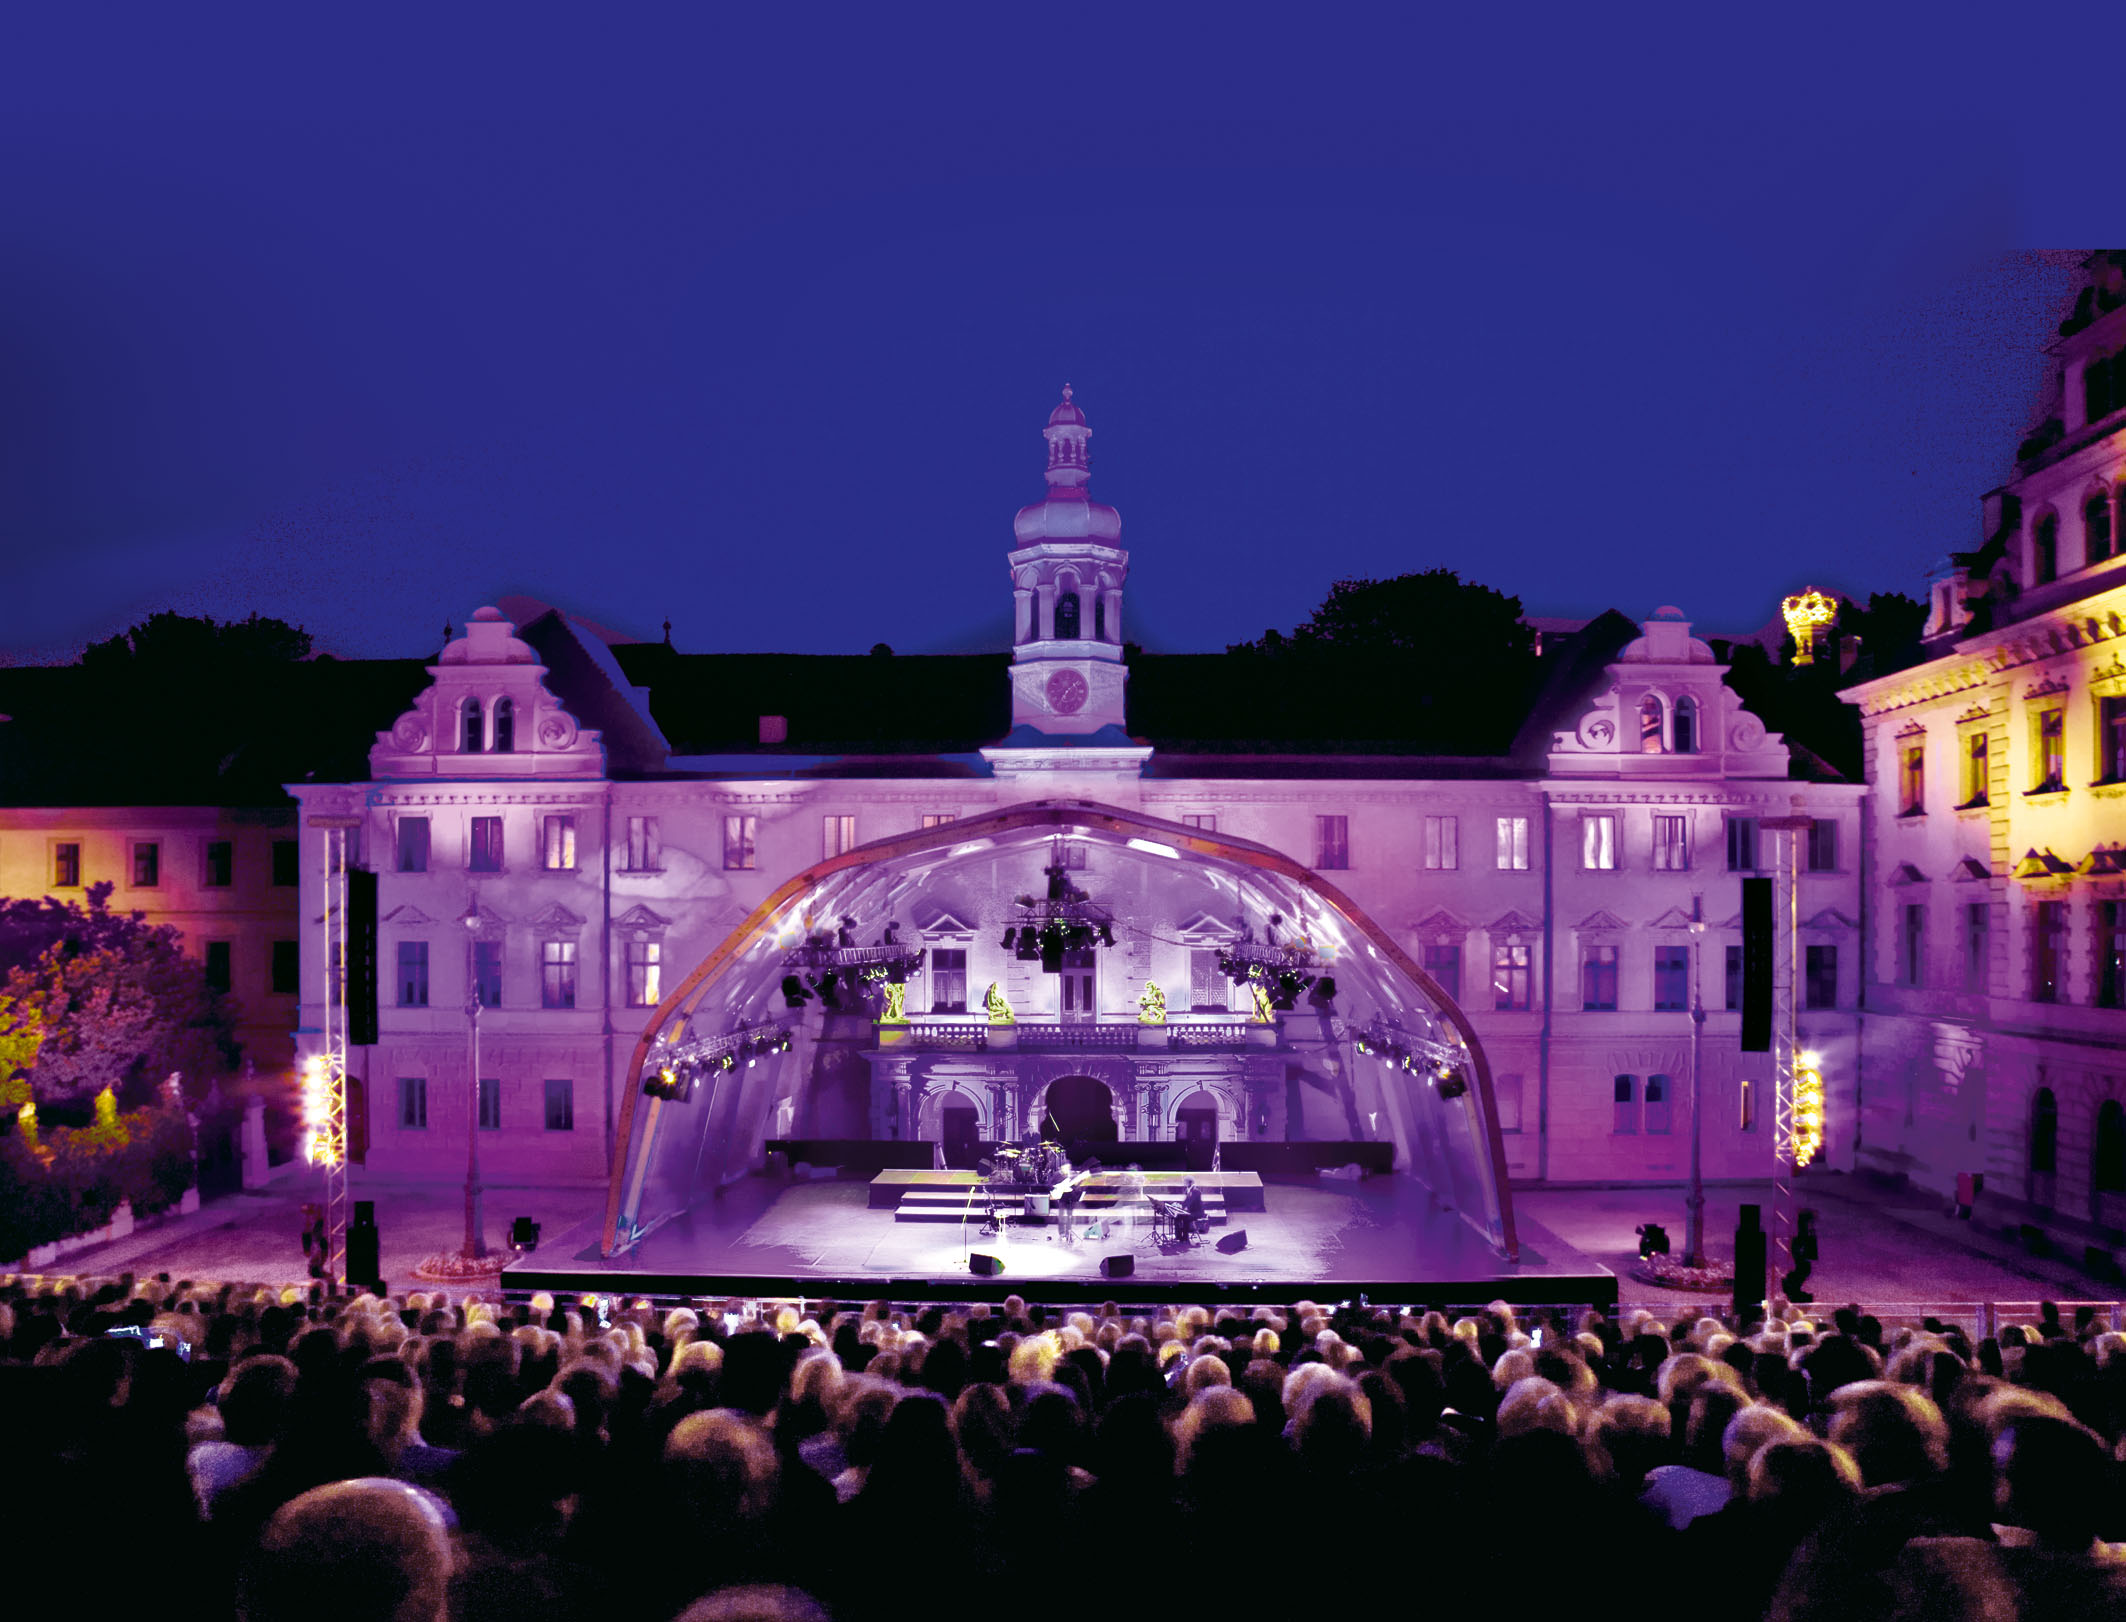 Schlossfestspiele Regensburg